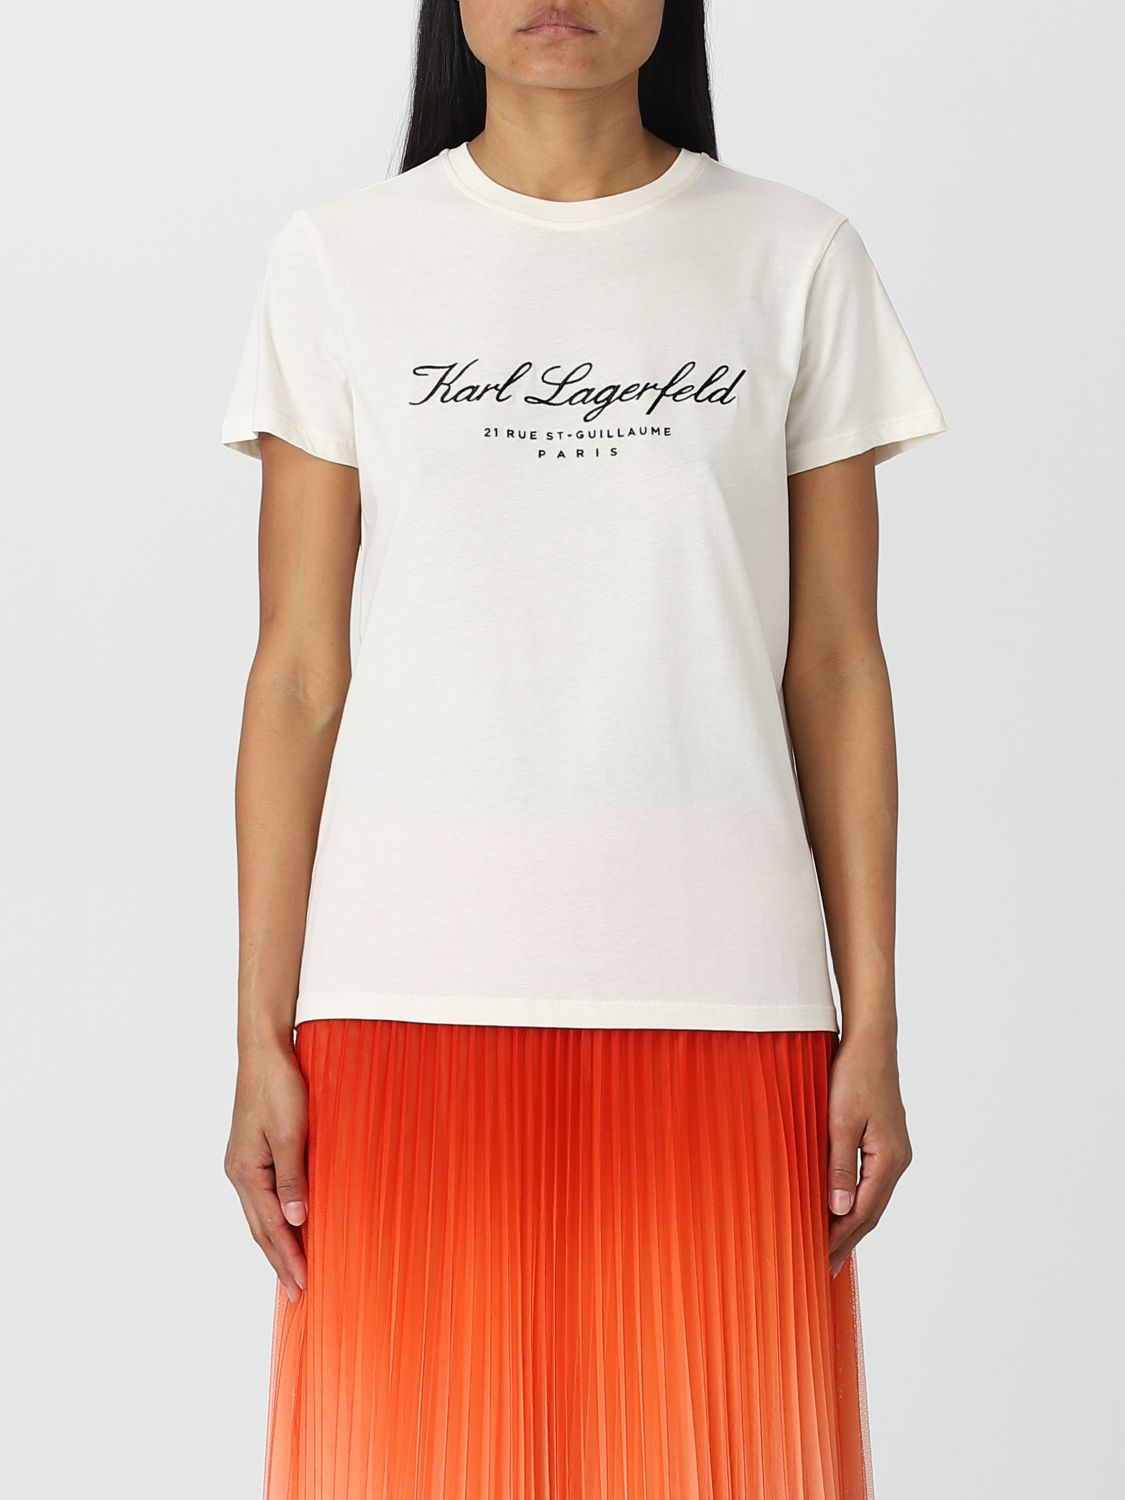 KARL LAGERFELD T-SHIRT KARL LAGERFELD WOMAN COLOR WHITE,E16610001